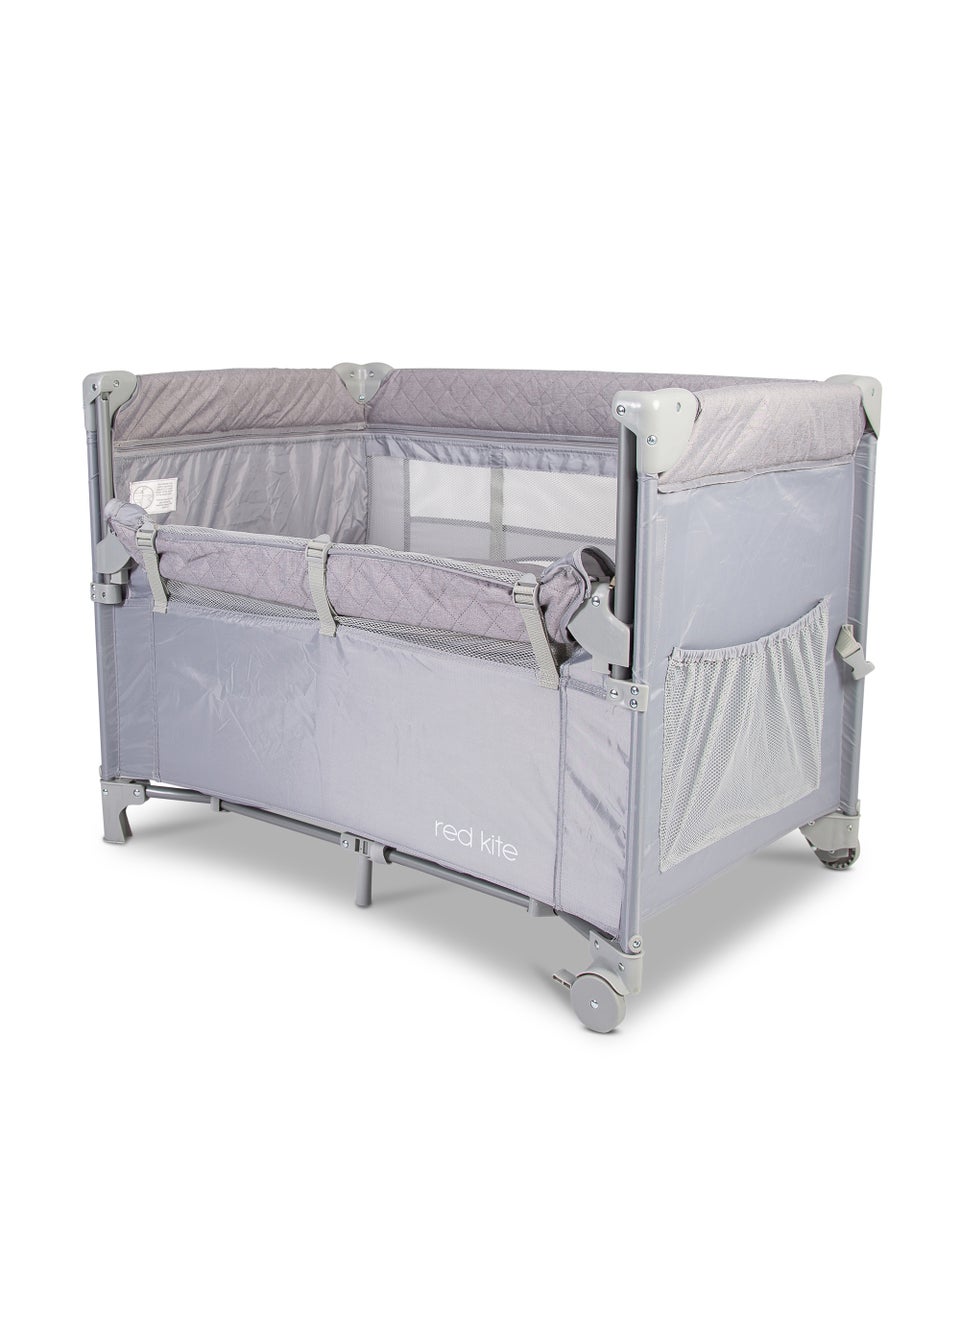 Red Kite Dreamer Bedside Travel Crib with Newborn Bassinet (69cm x 93cm x 66cm)